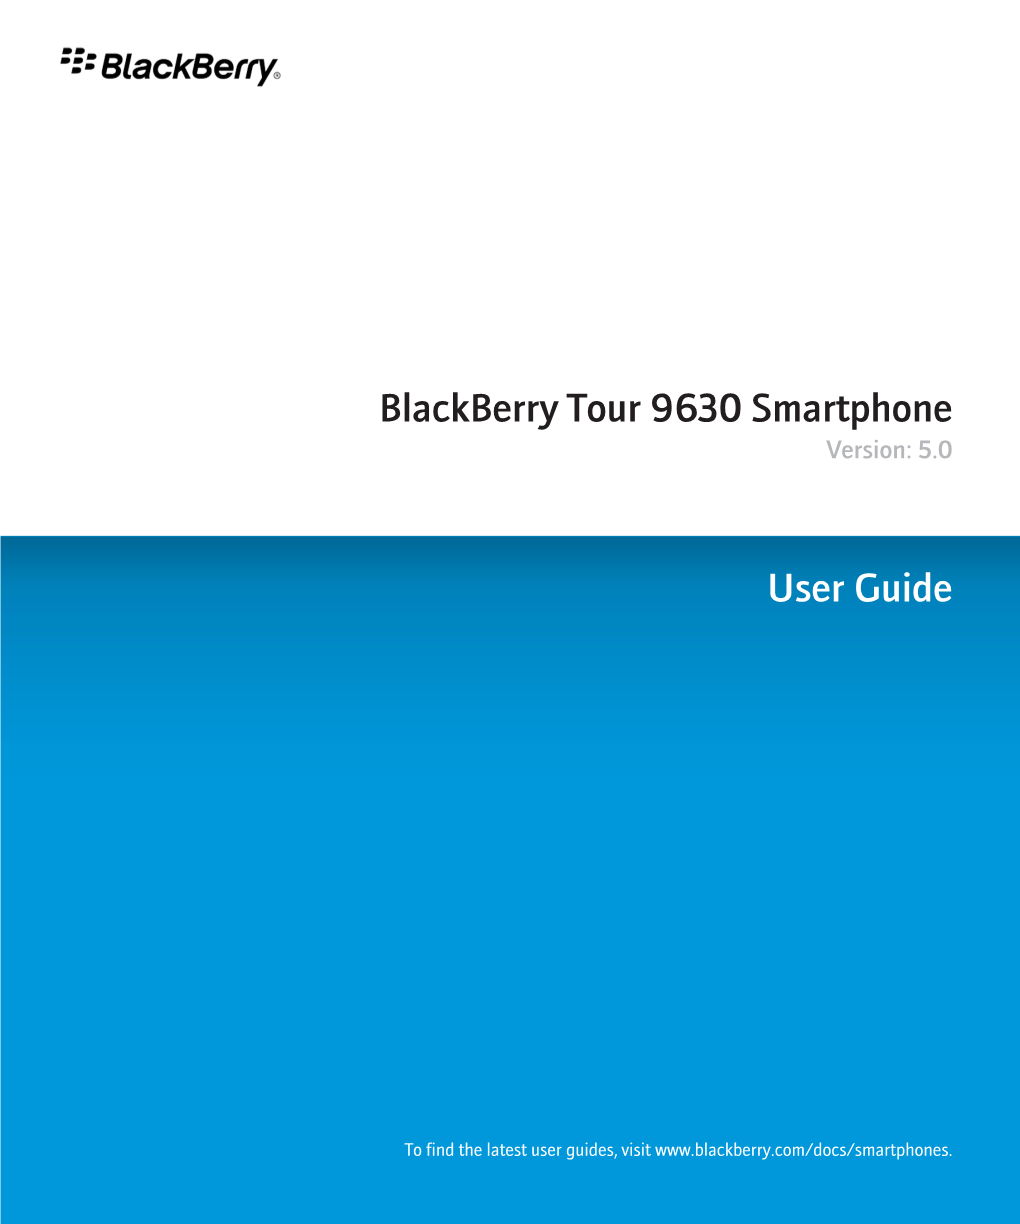 Blackberry Tour 9630 Smartphone Version: 5.0